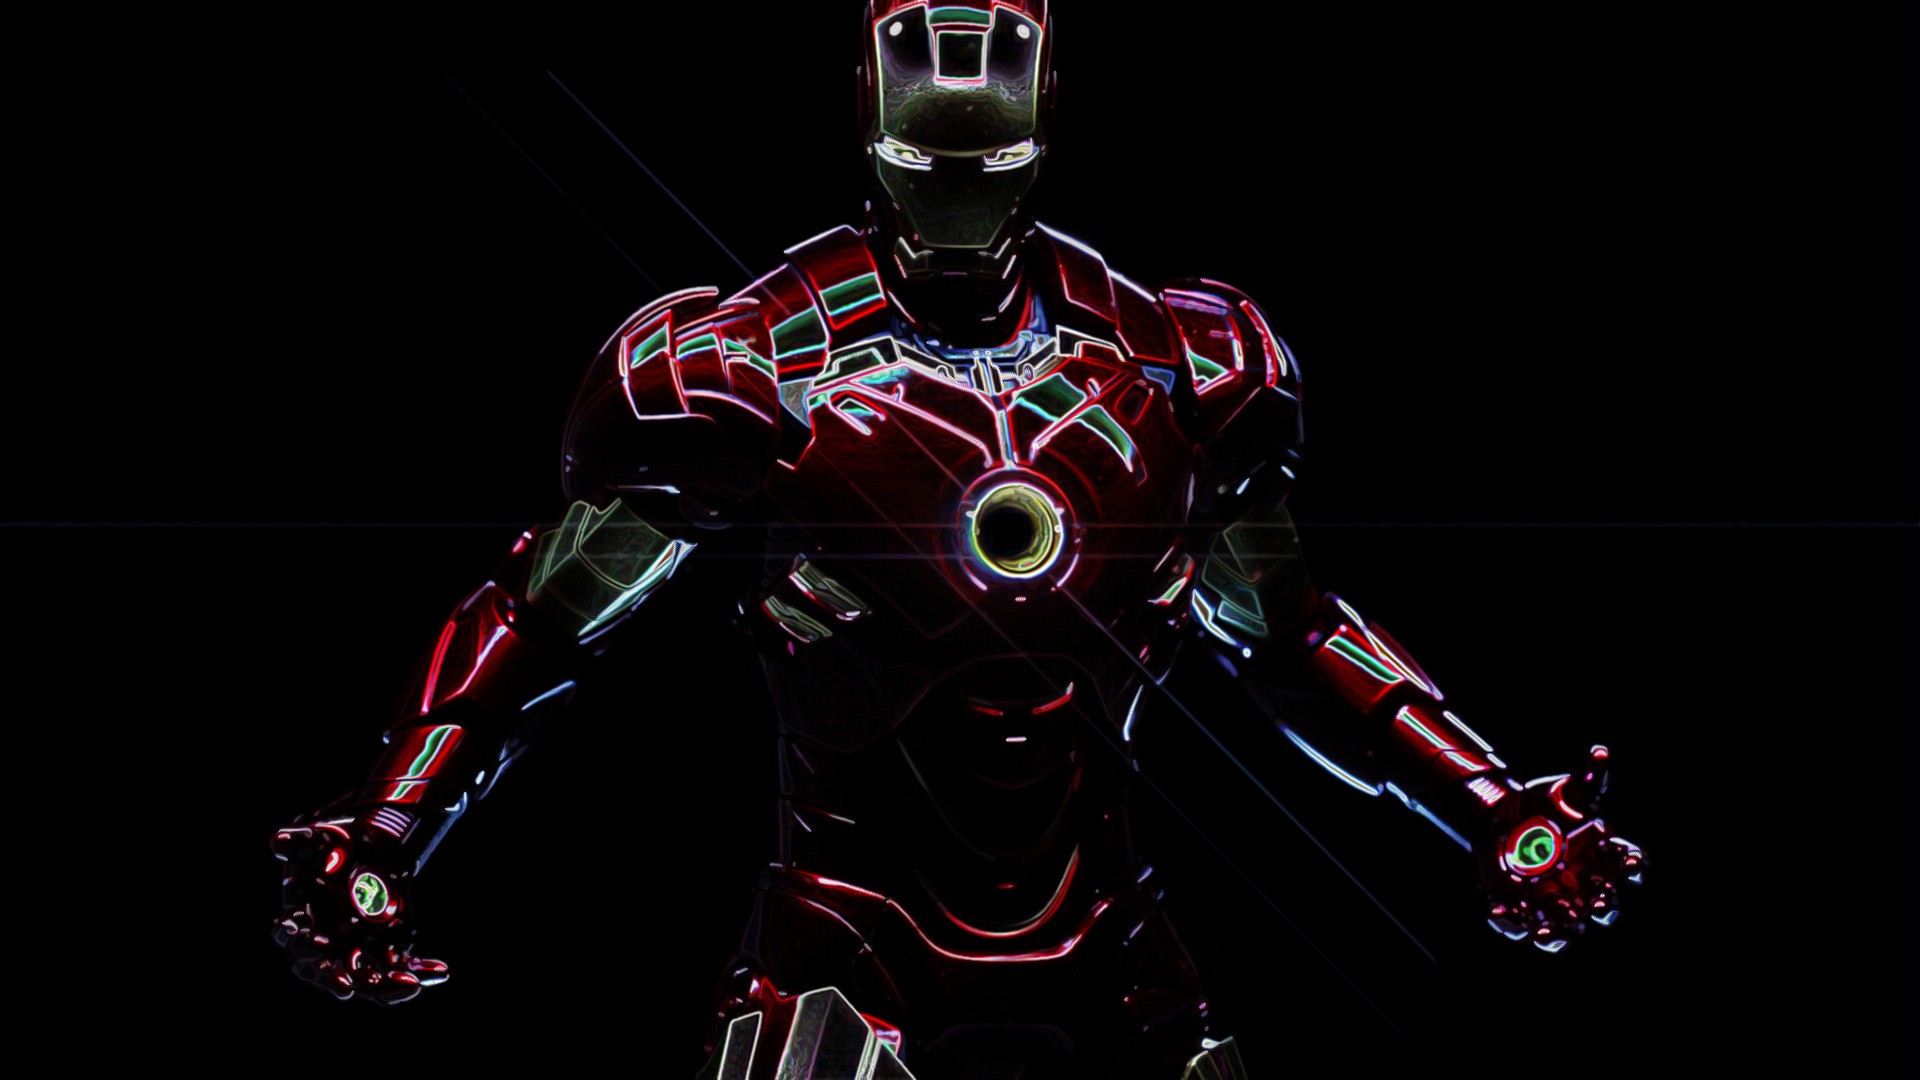 Iron Man, Superhero, Tony Stark, Robert Downey Jr., Black Background, Artwork, Digital Art Wallpaper